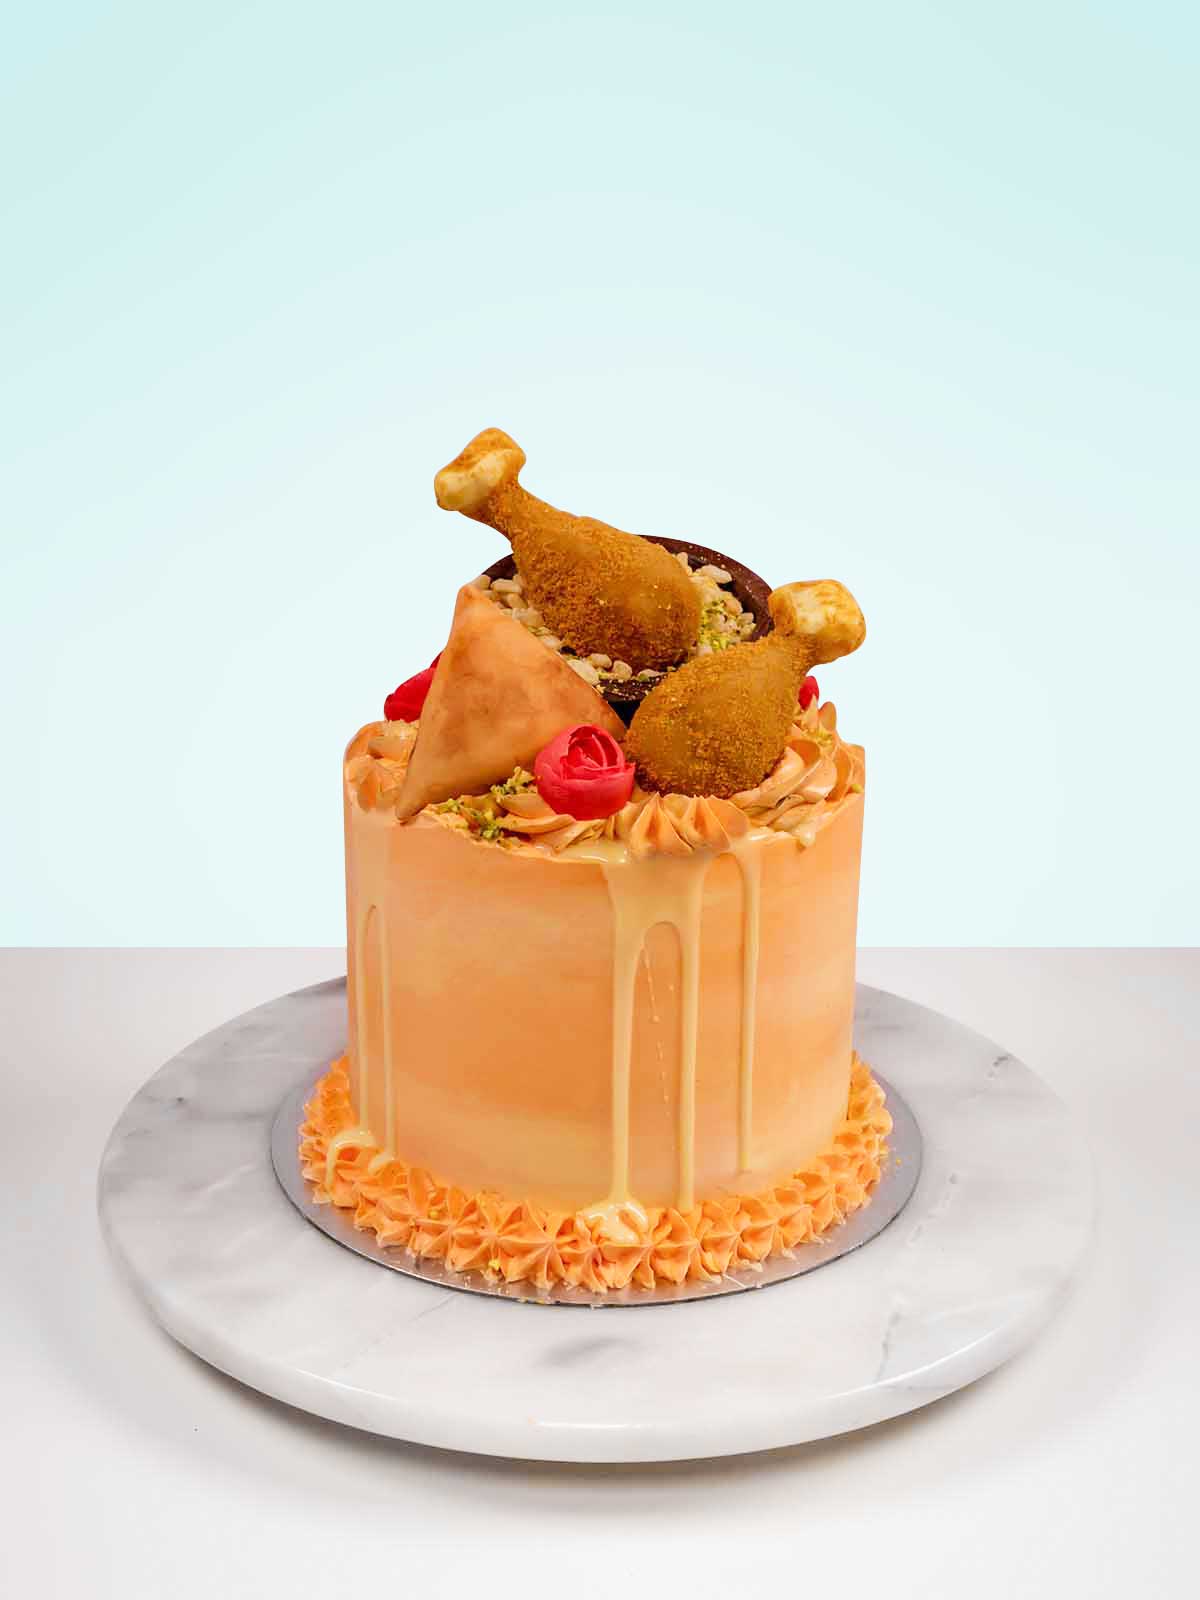 Chicken Biryani cake | Miniature food, Food, Cake decorating